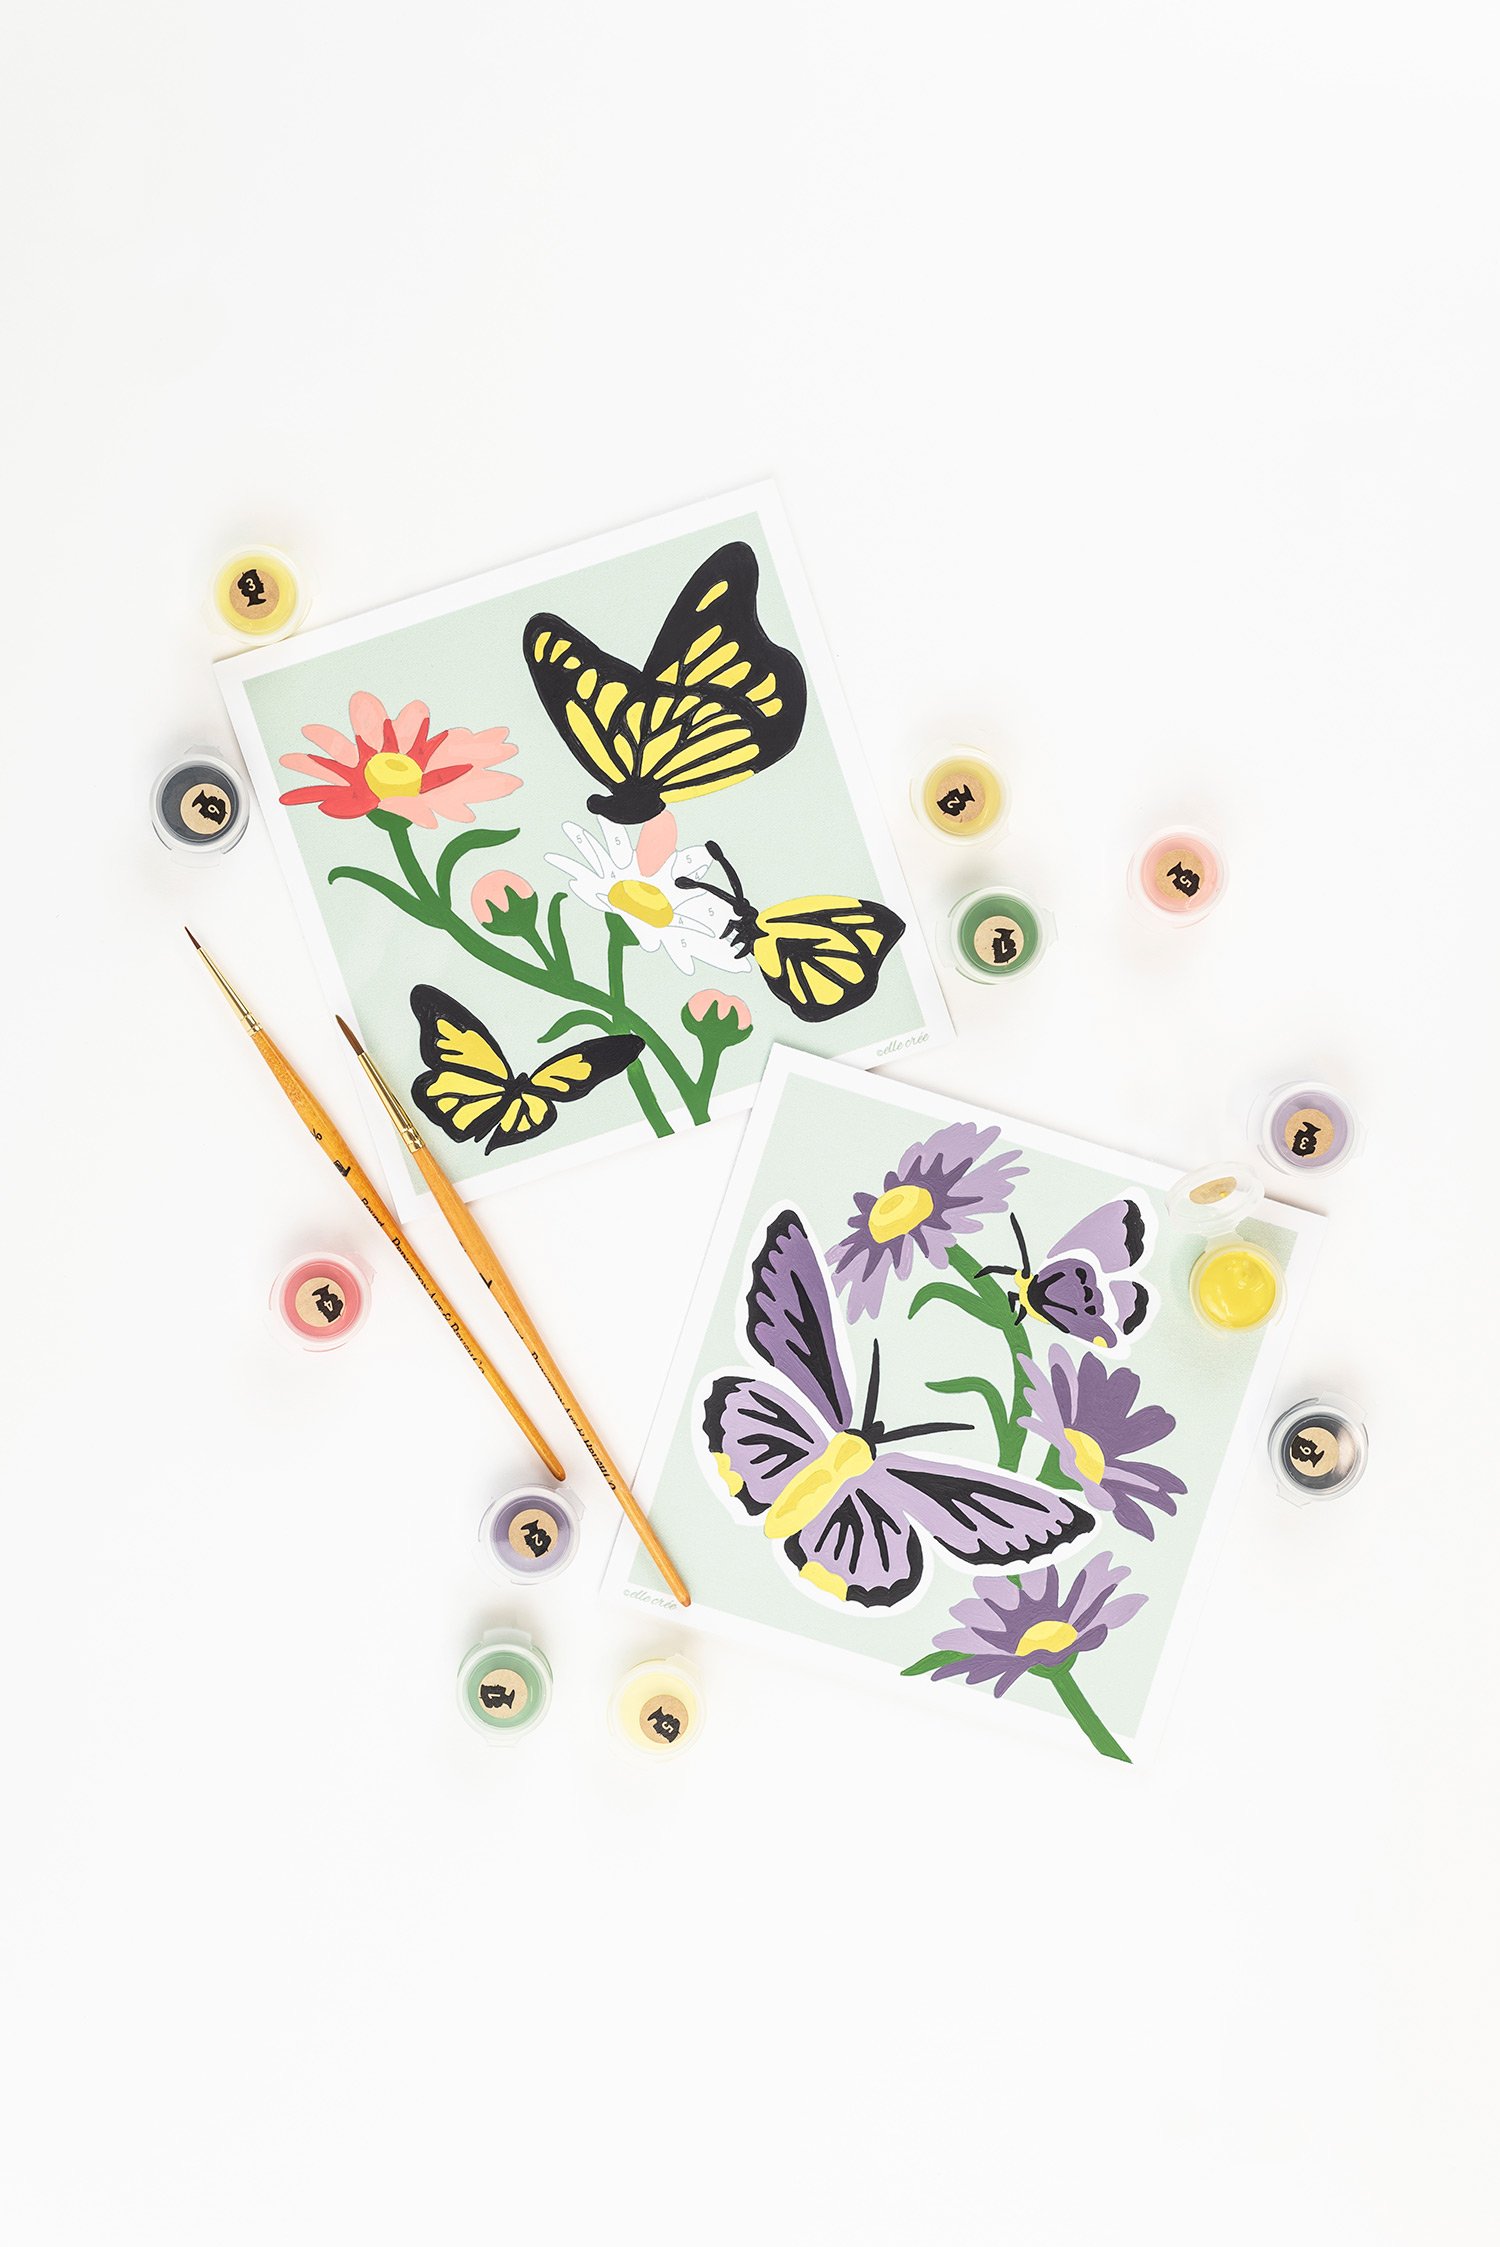 Pride Bee | Mini Paint-by-Number Kit — Elle Crée (she creates)